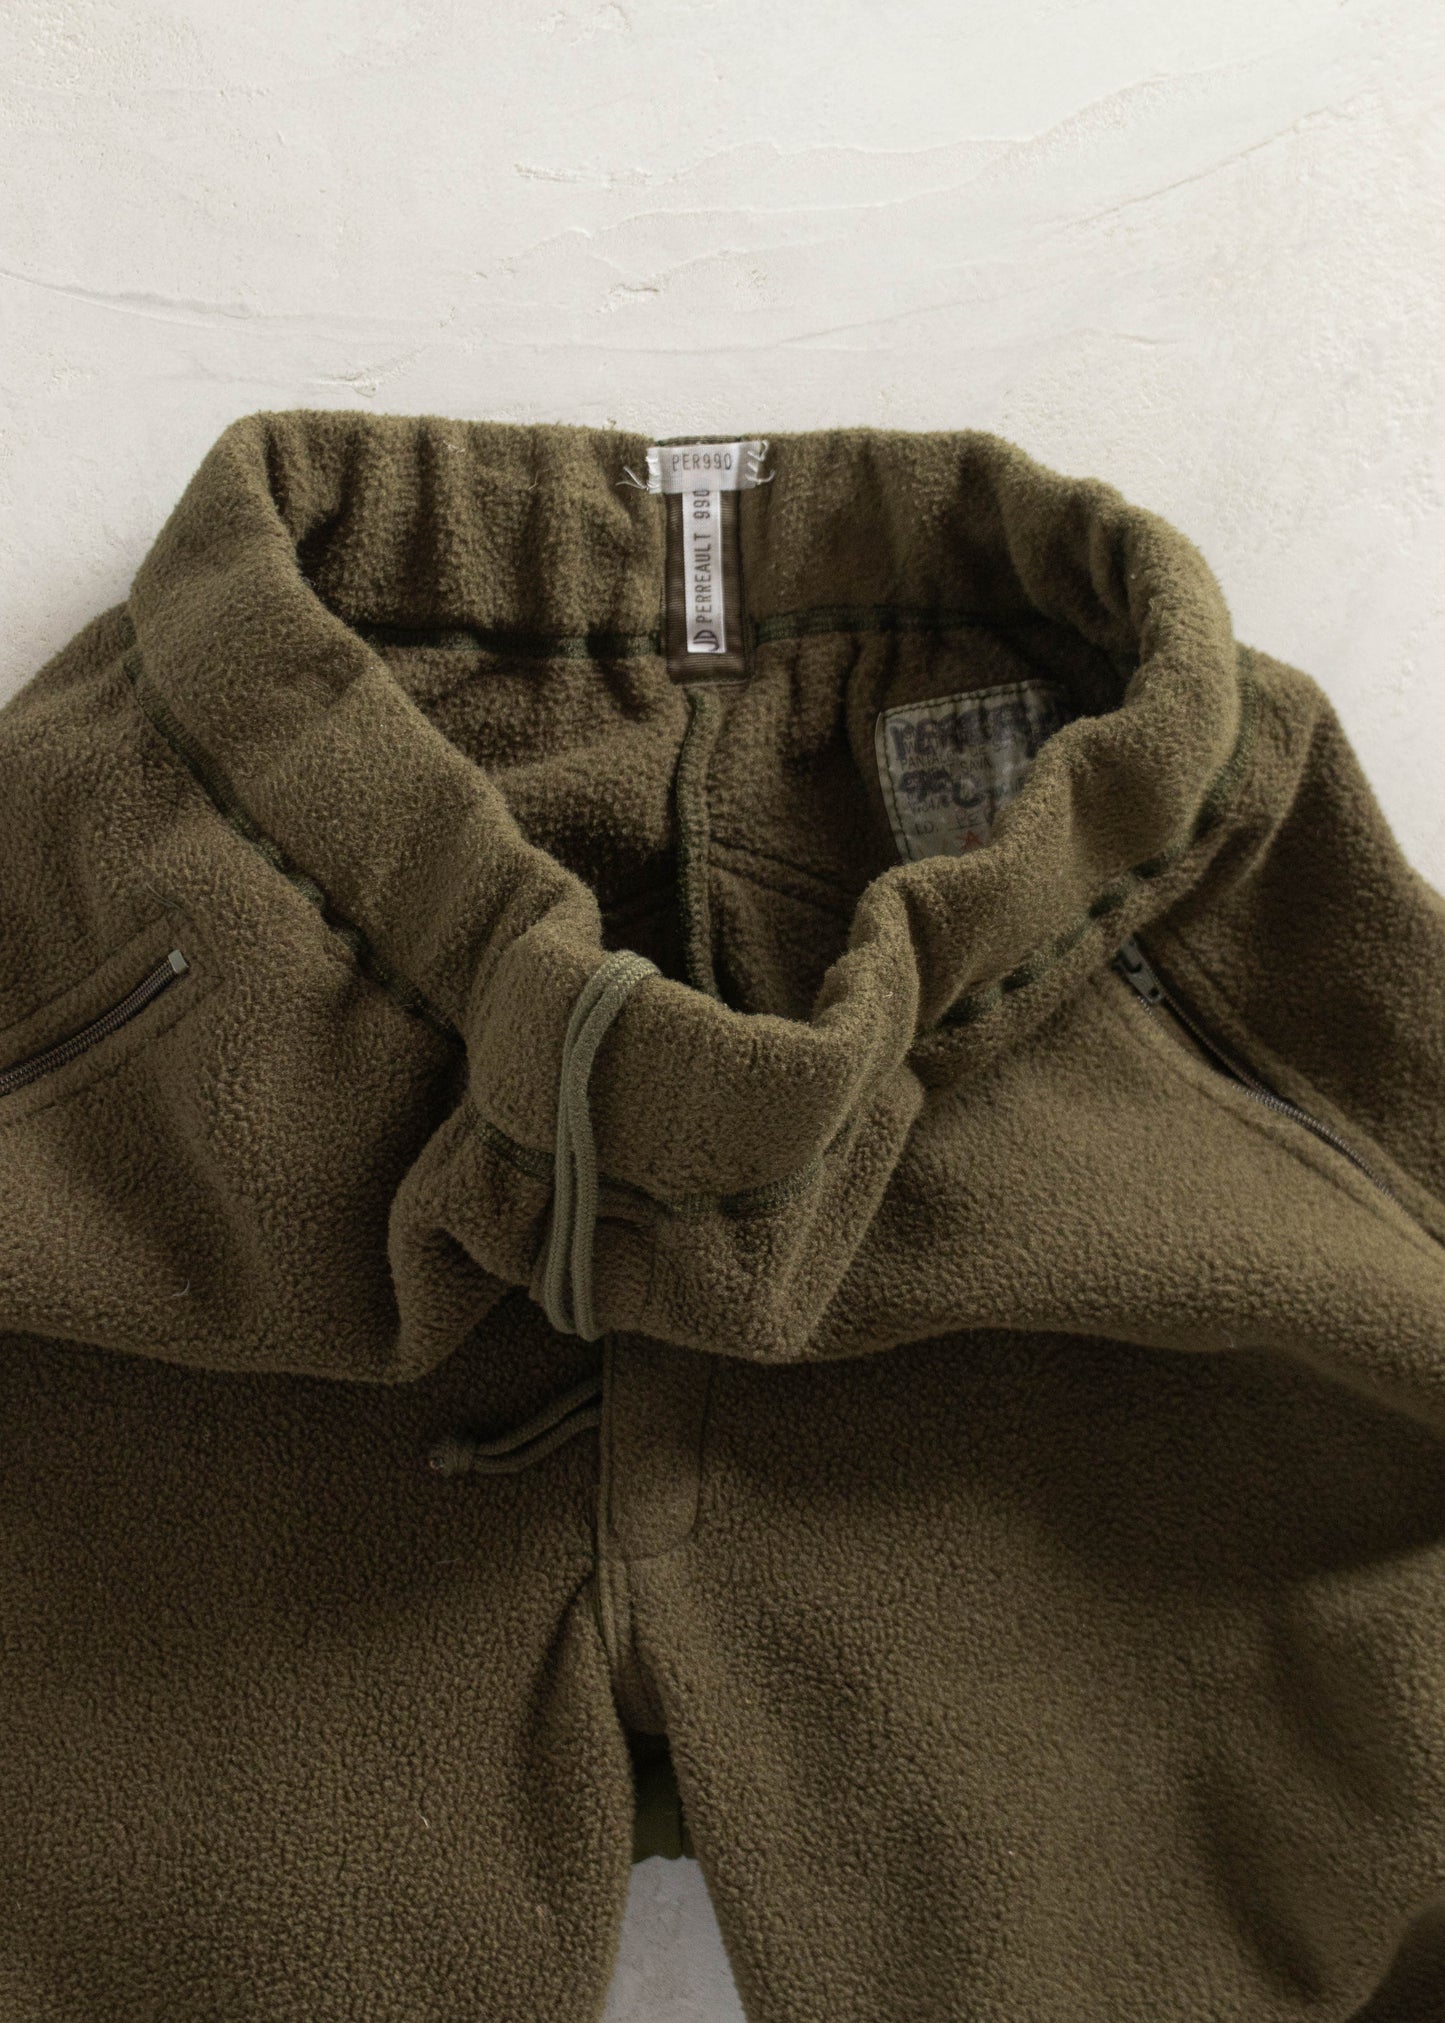 1990s Military Combat Polar Fleece Sweatpants Size XS/S